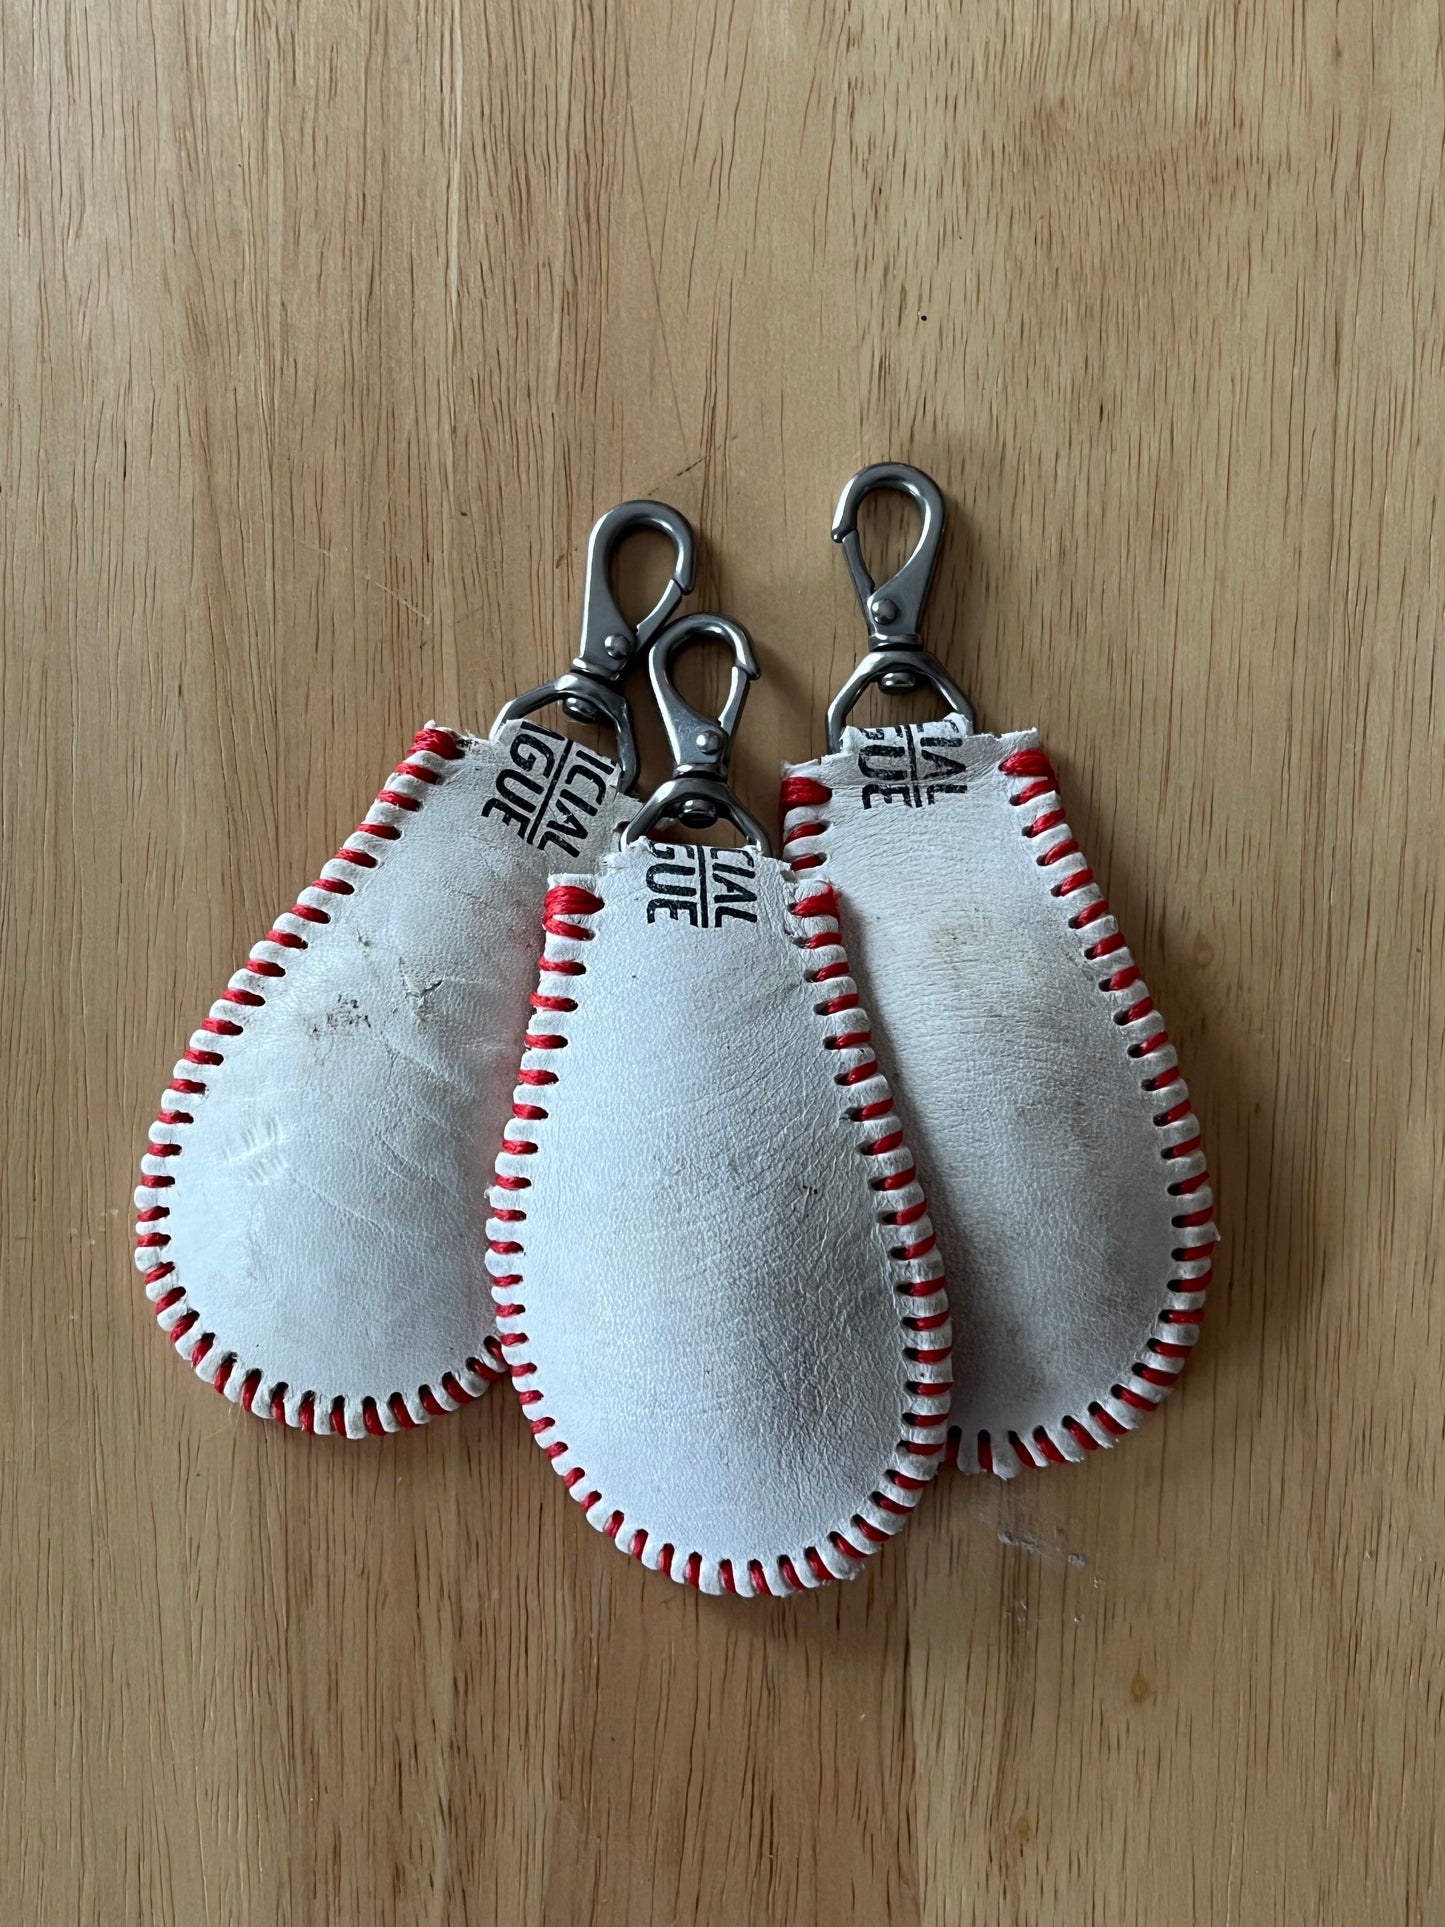 Baseball Bat Bag Pulls